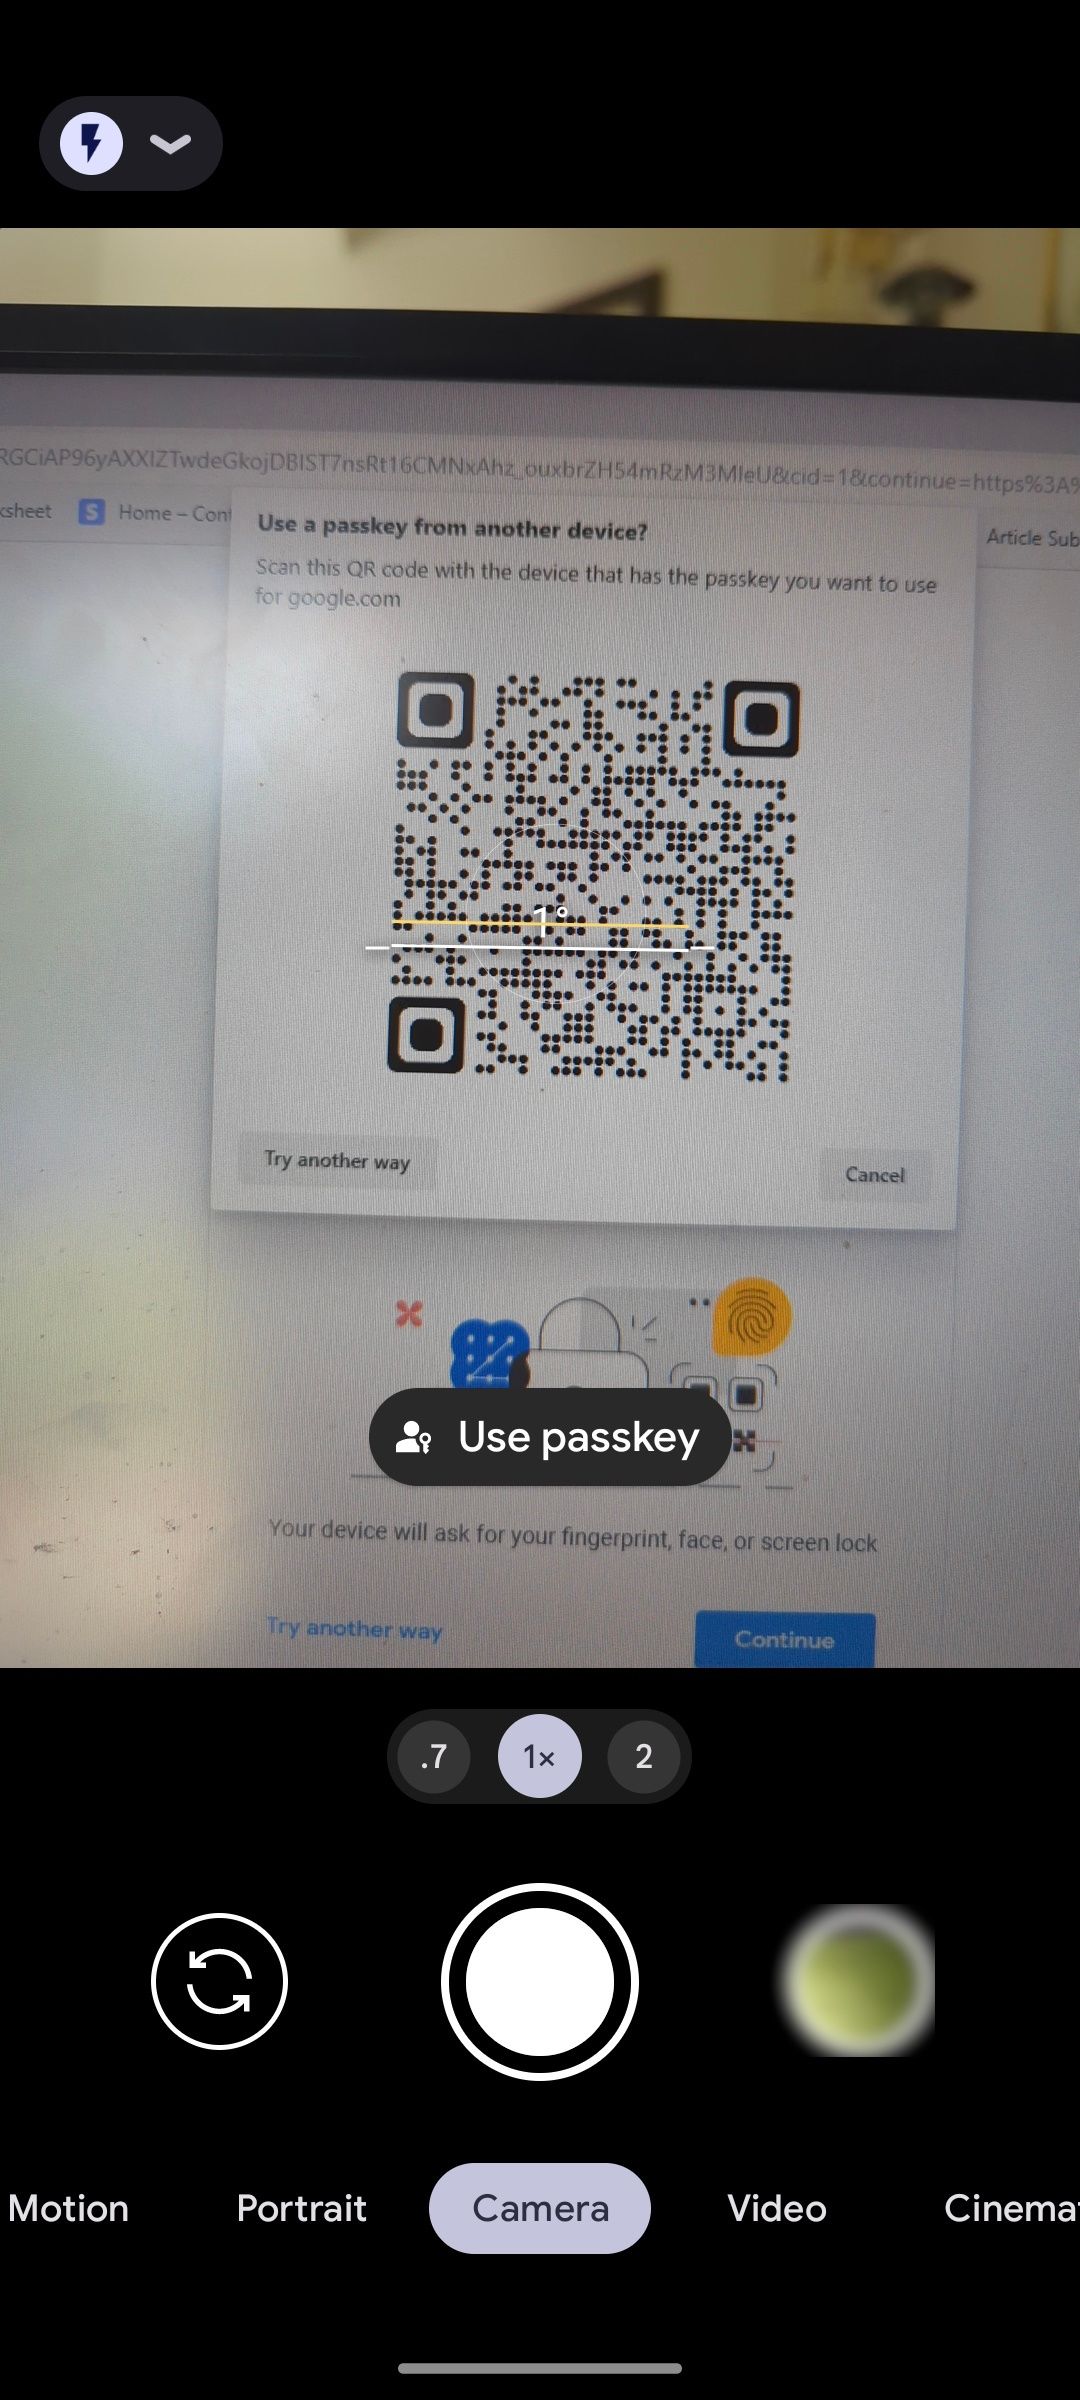 Connecting Google Passkey via QR code via Android Camera app